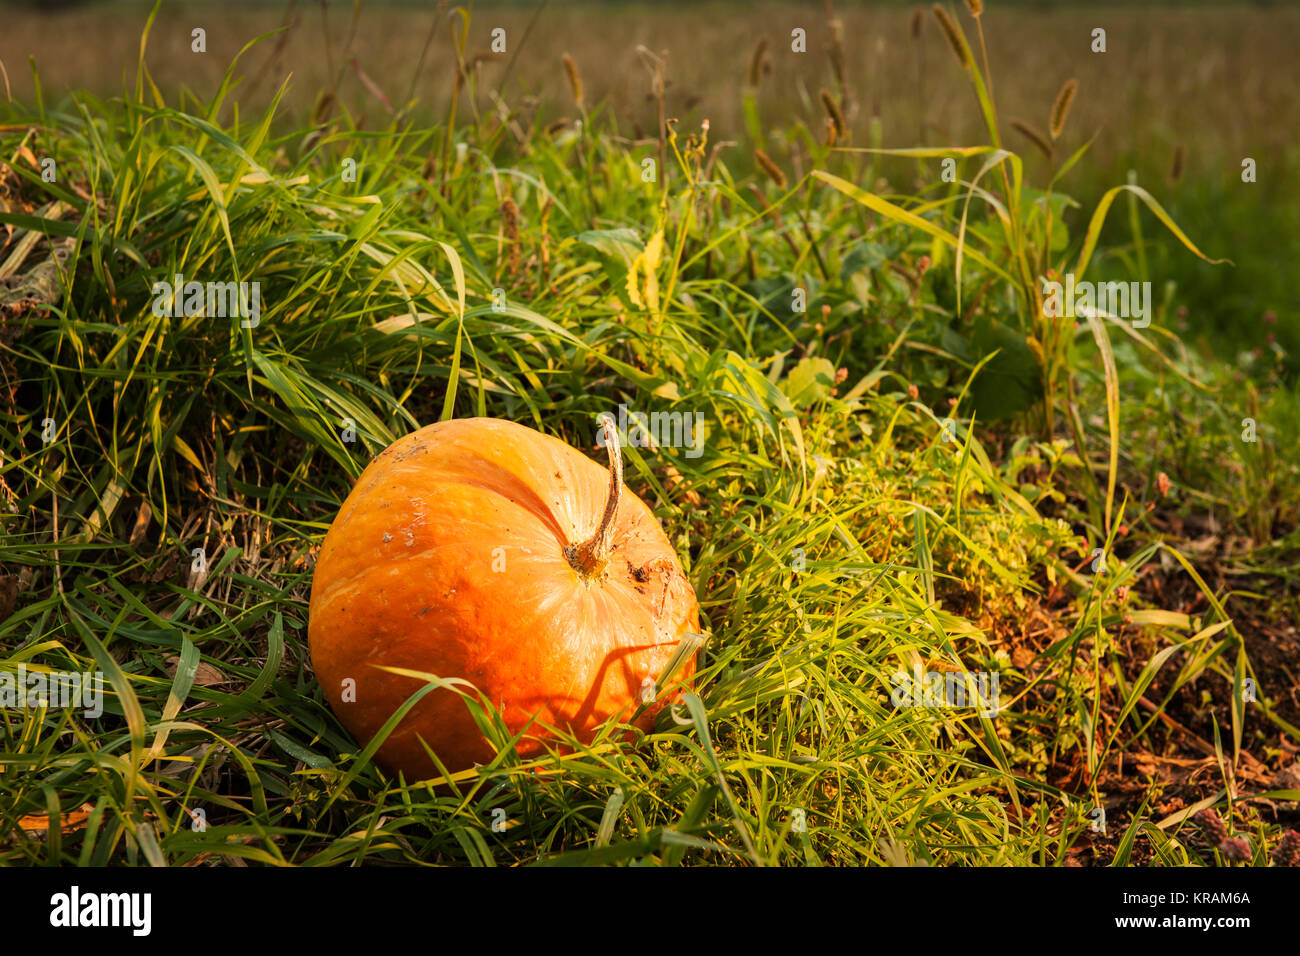 pumpkin in the grass Stock Photo